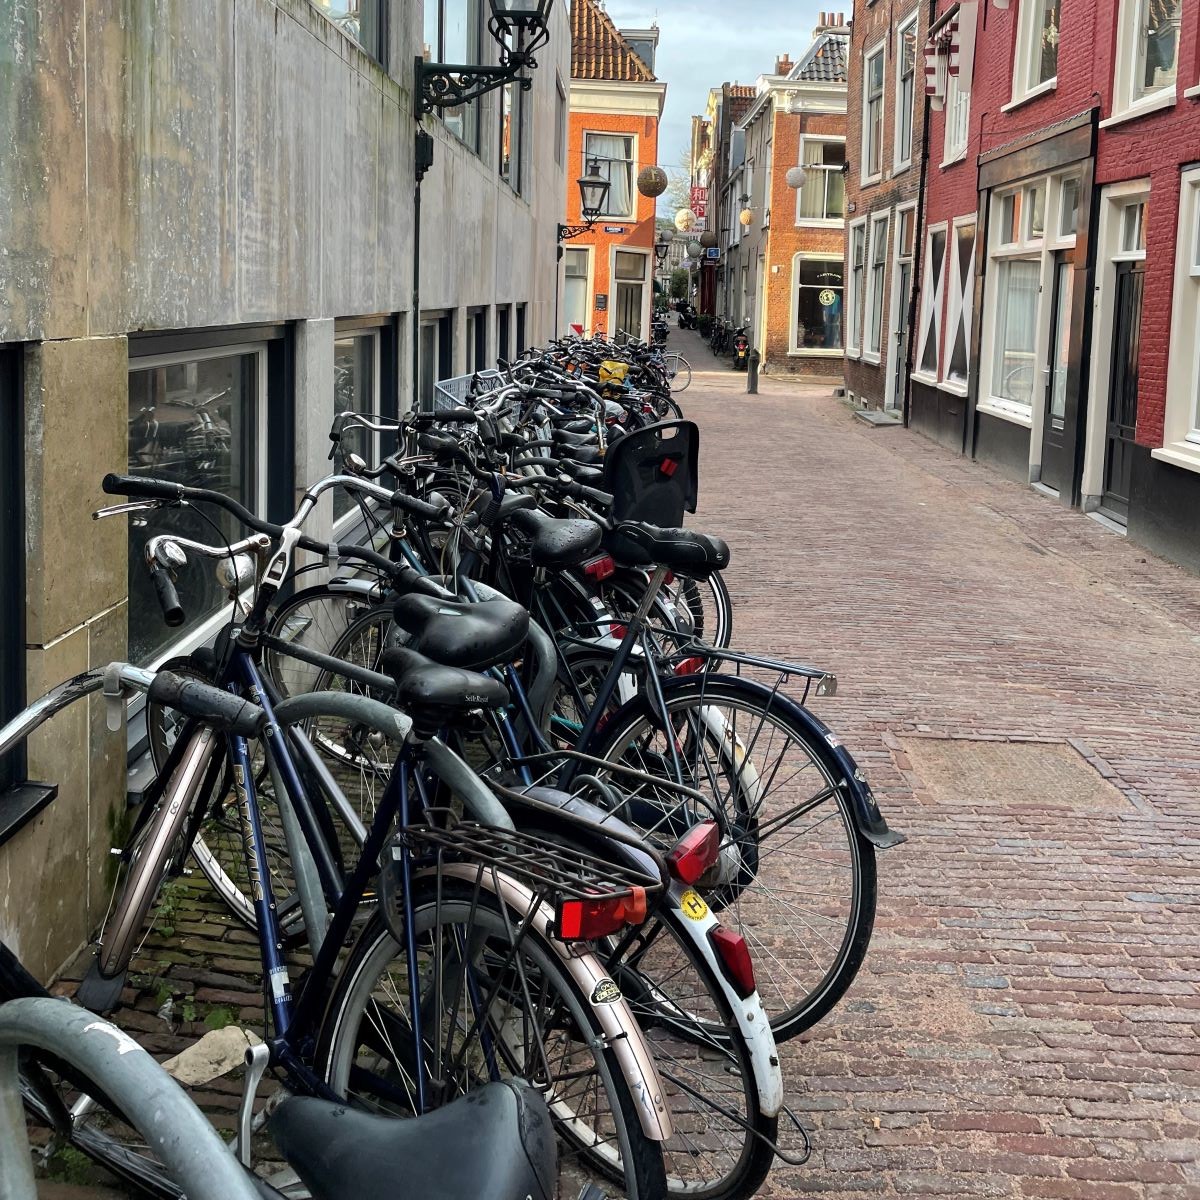 Line of bikes in a Dutch street